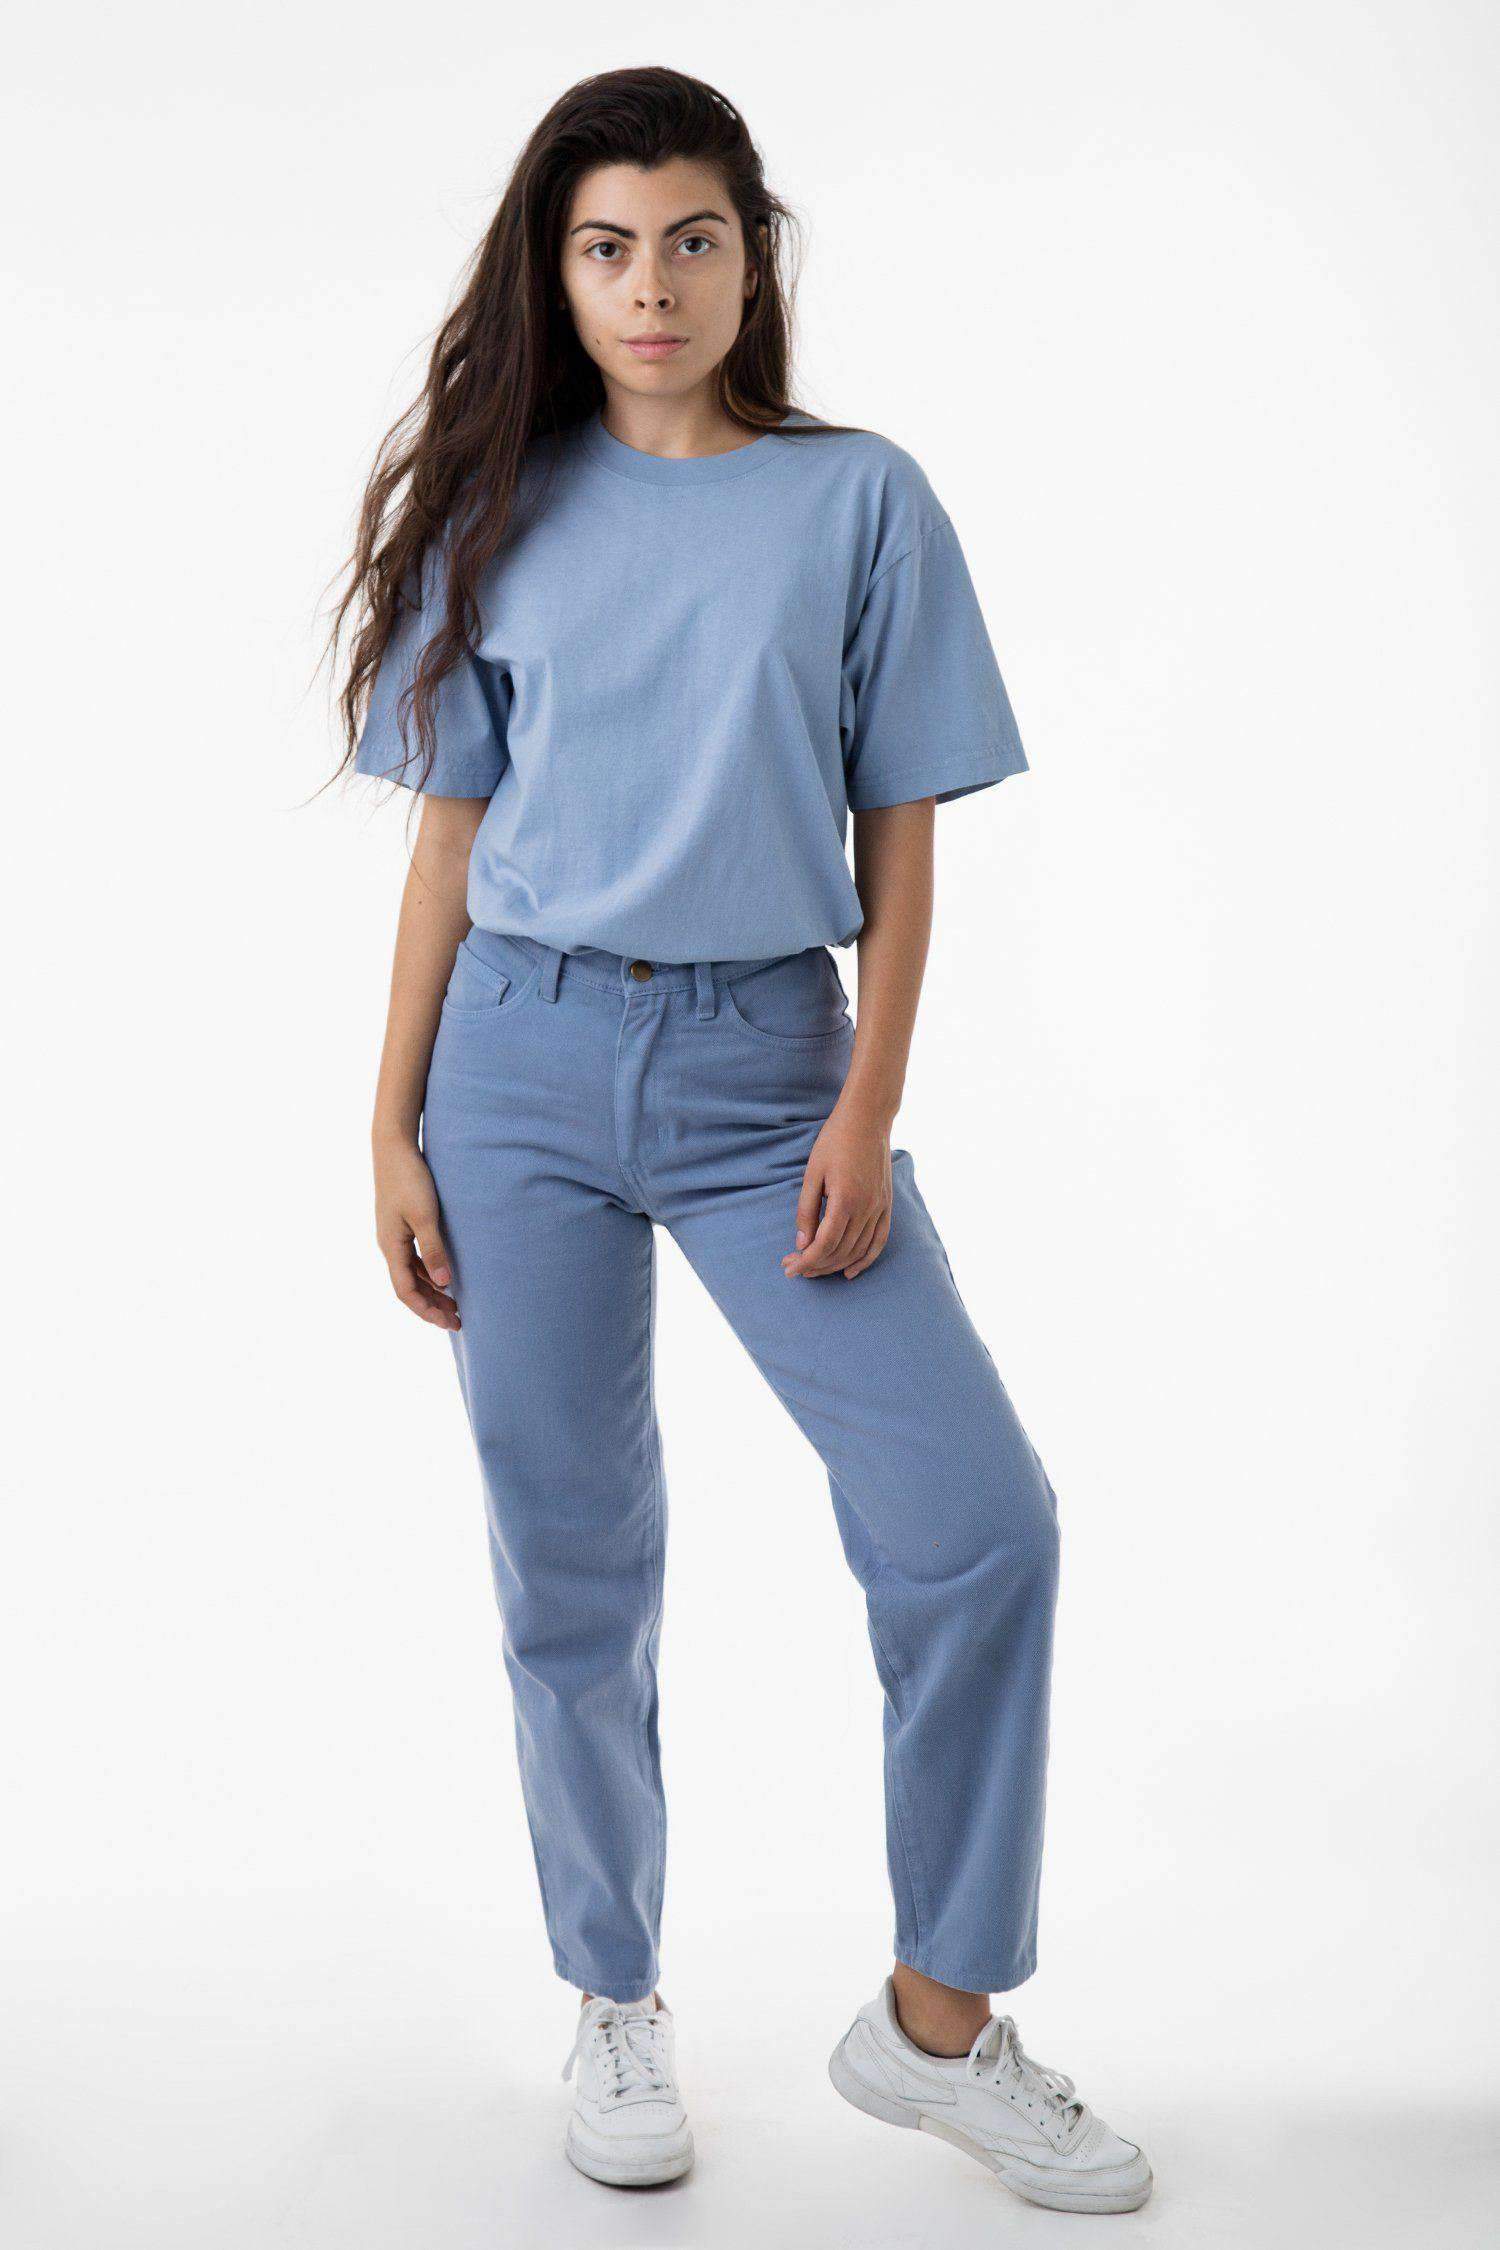 RBDW01GD - Garment Dye Women's Relaxed Fit Bull Denim Jean Jeans Los Angeles Apparel Clear Blue 25/28 